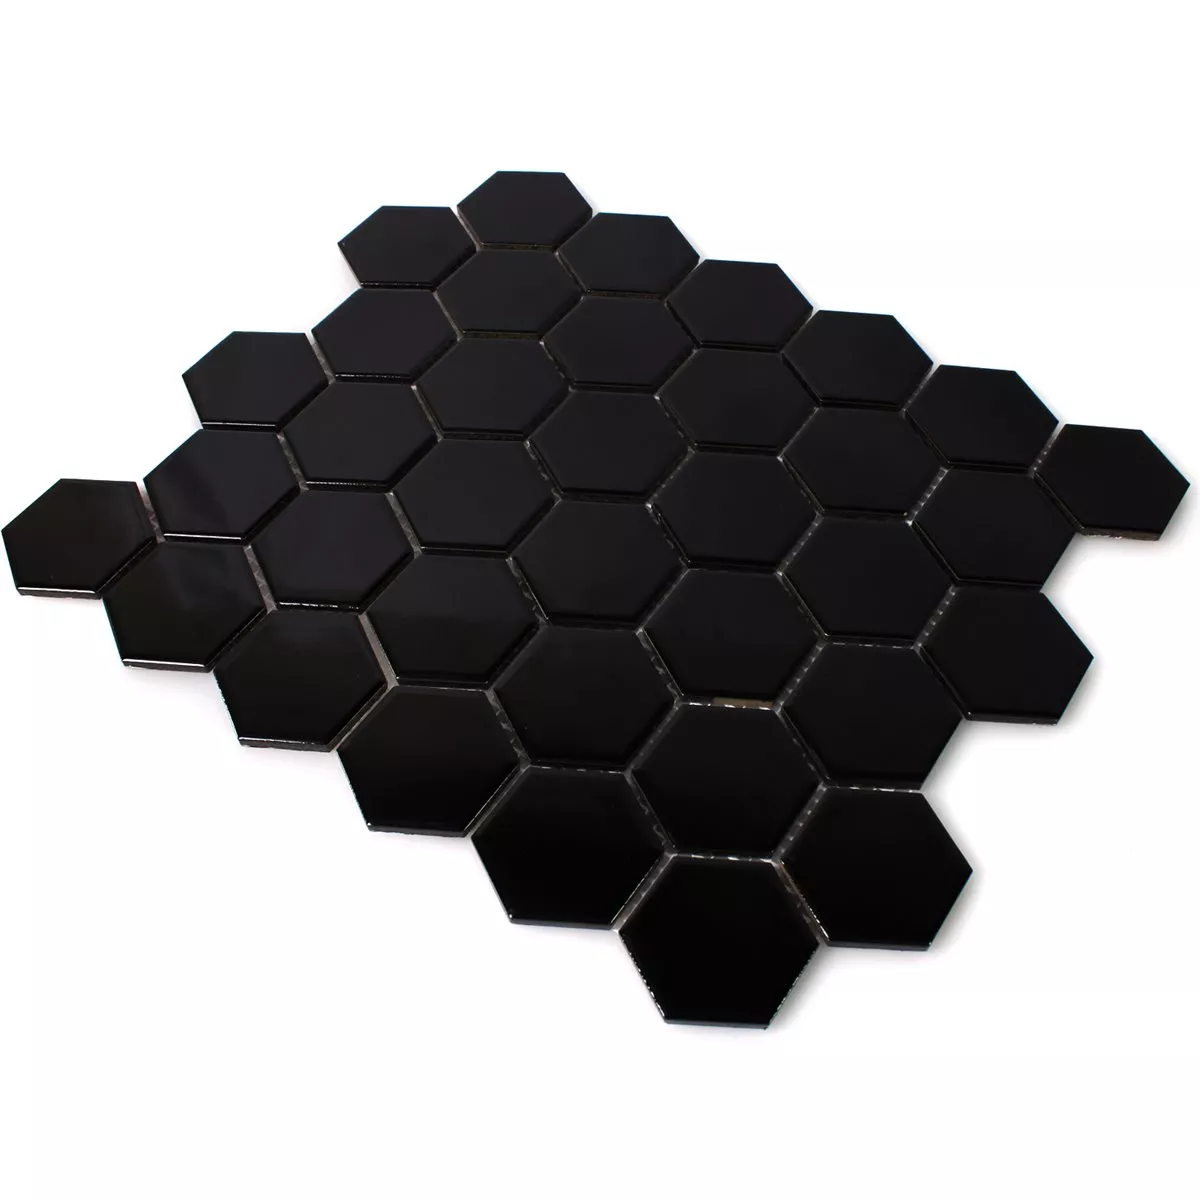 Sample Mosaic Tiles Ceramic Hexagon Black Glossy